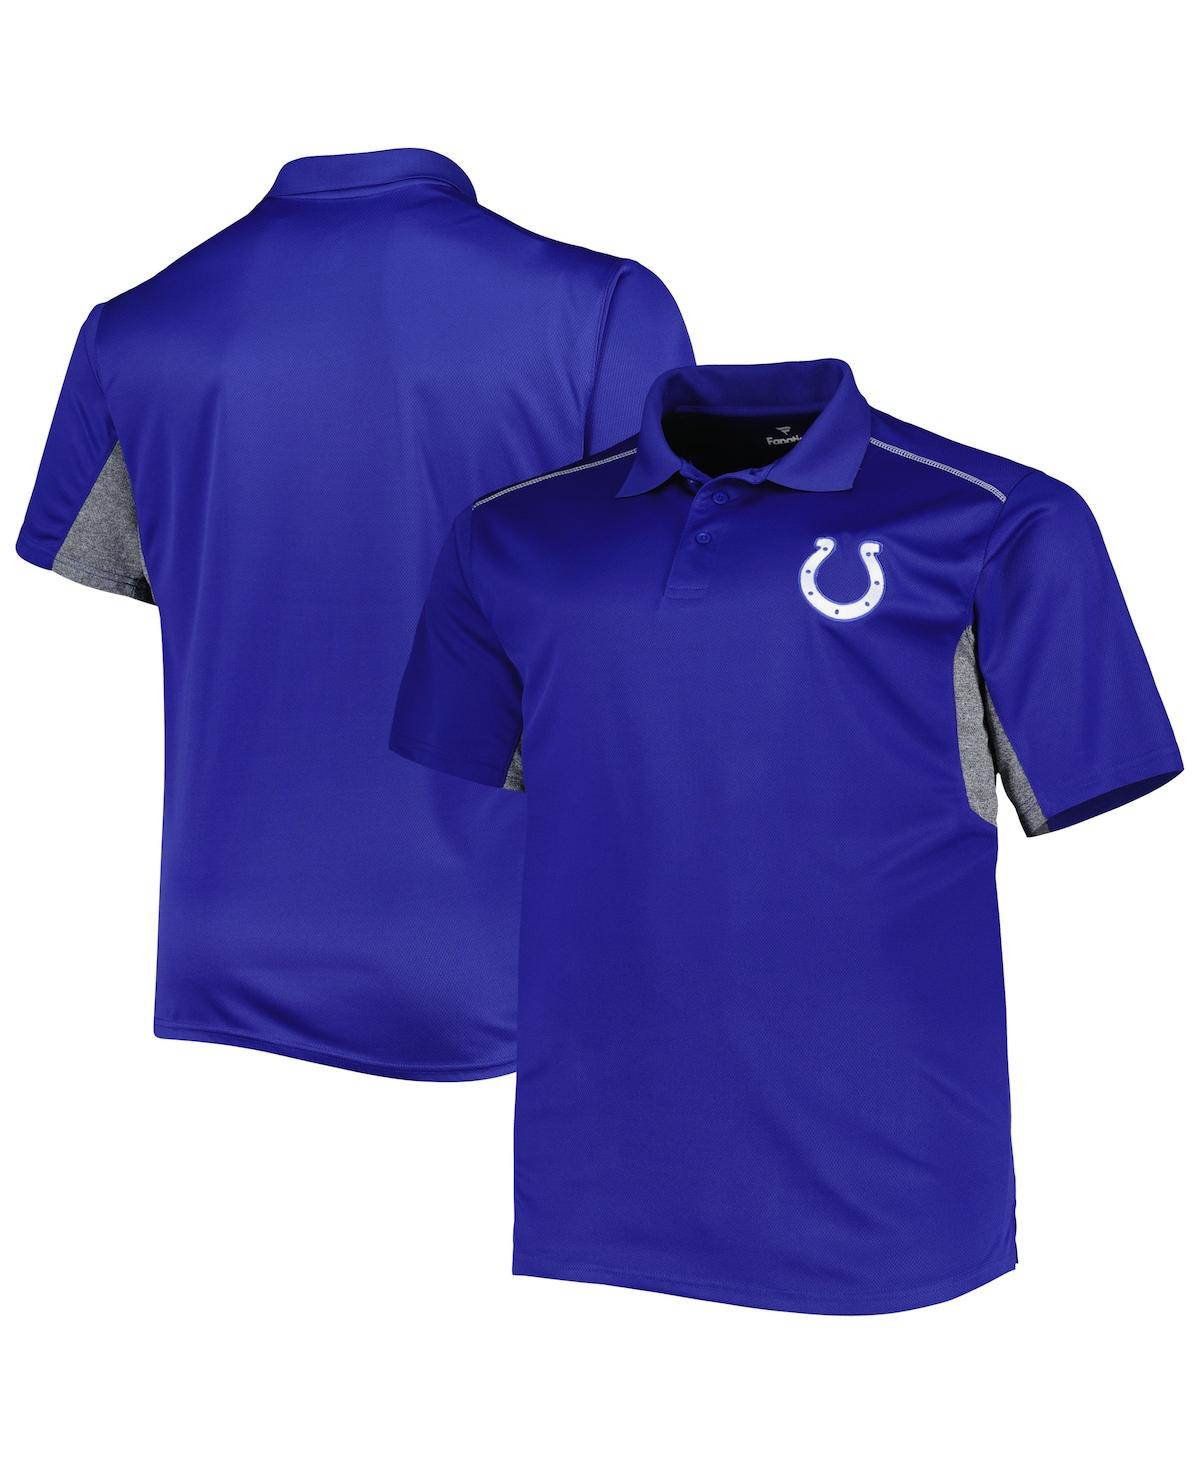 Fanatics Men's Royal Indianapolis Colts Big And Tall Team Color Polo Shirt